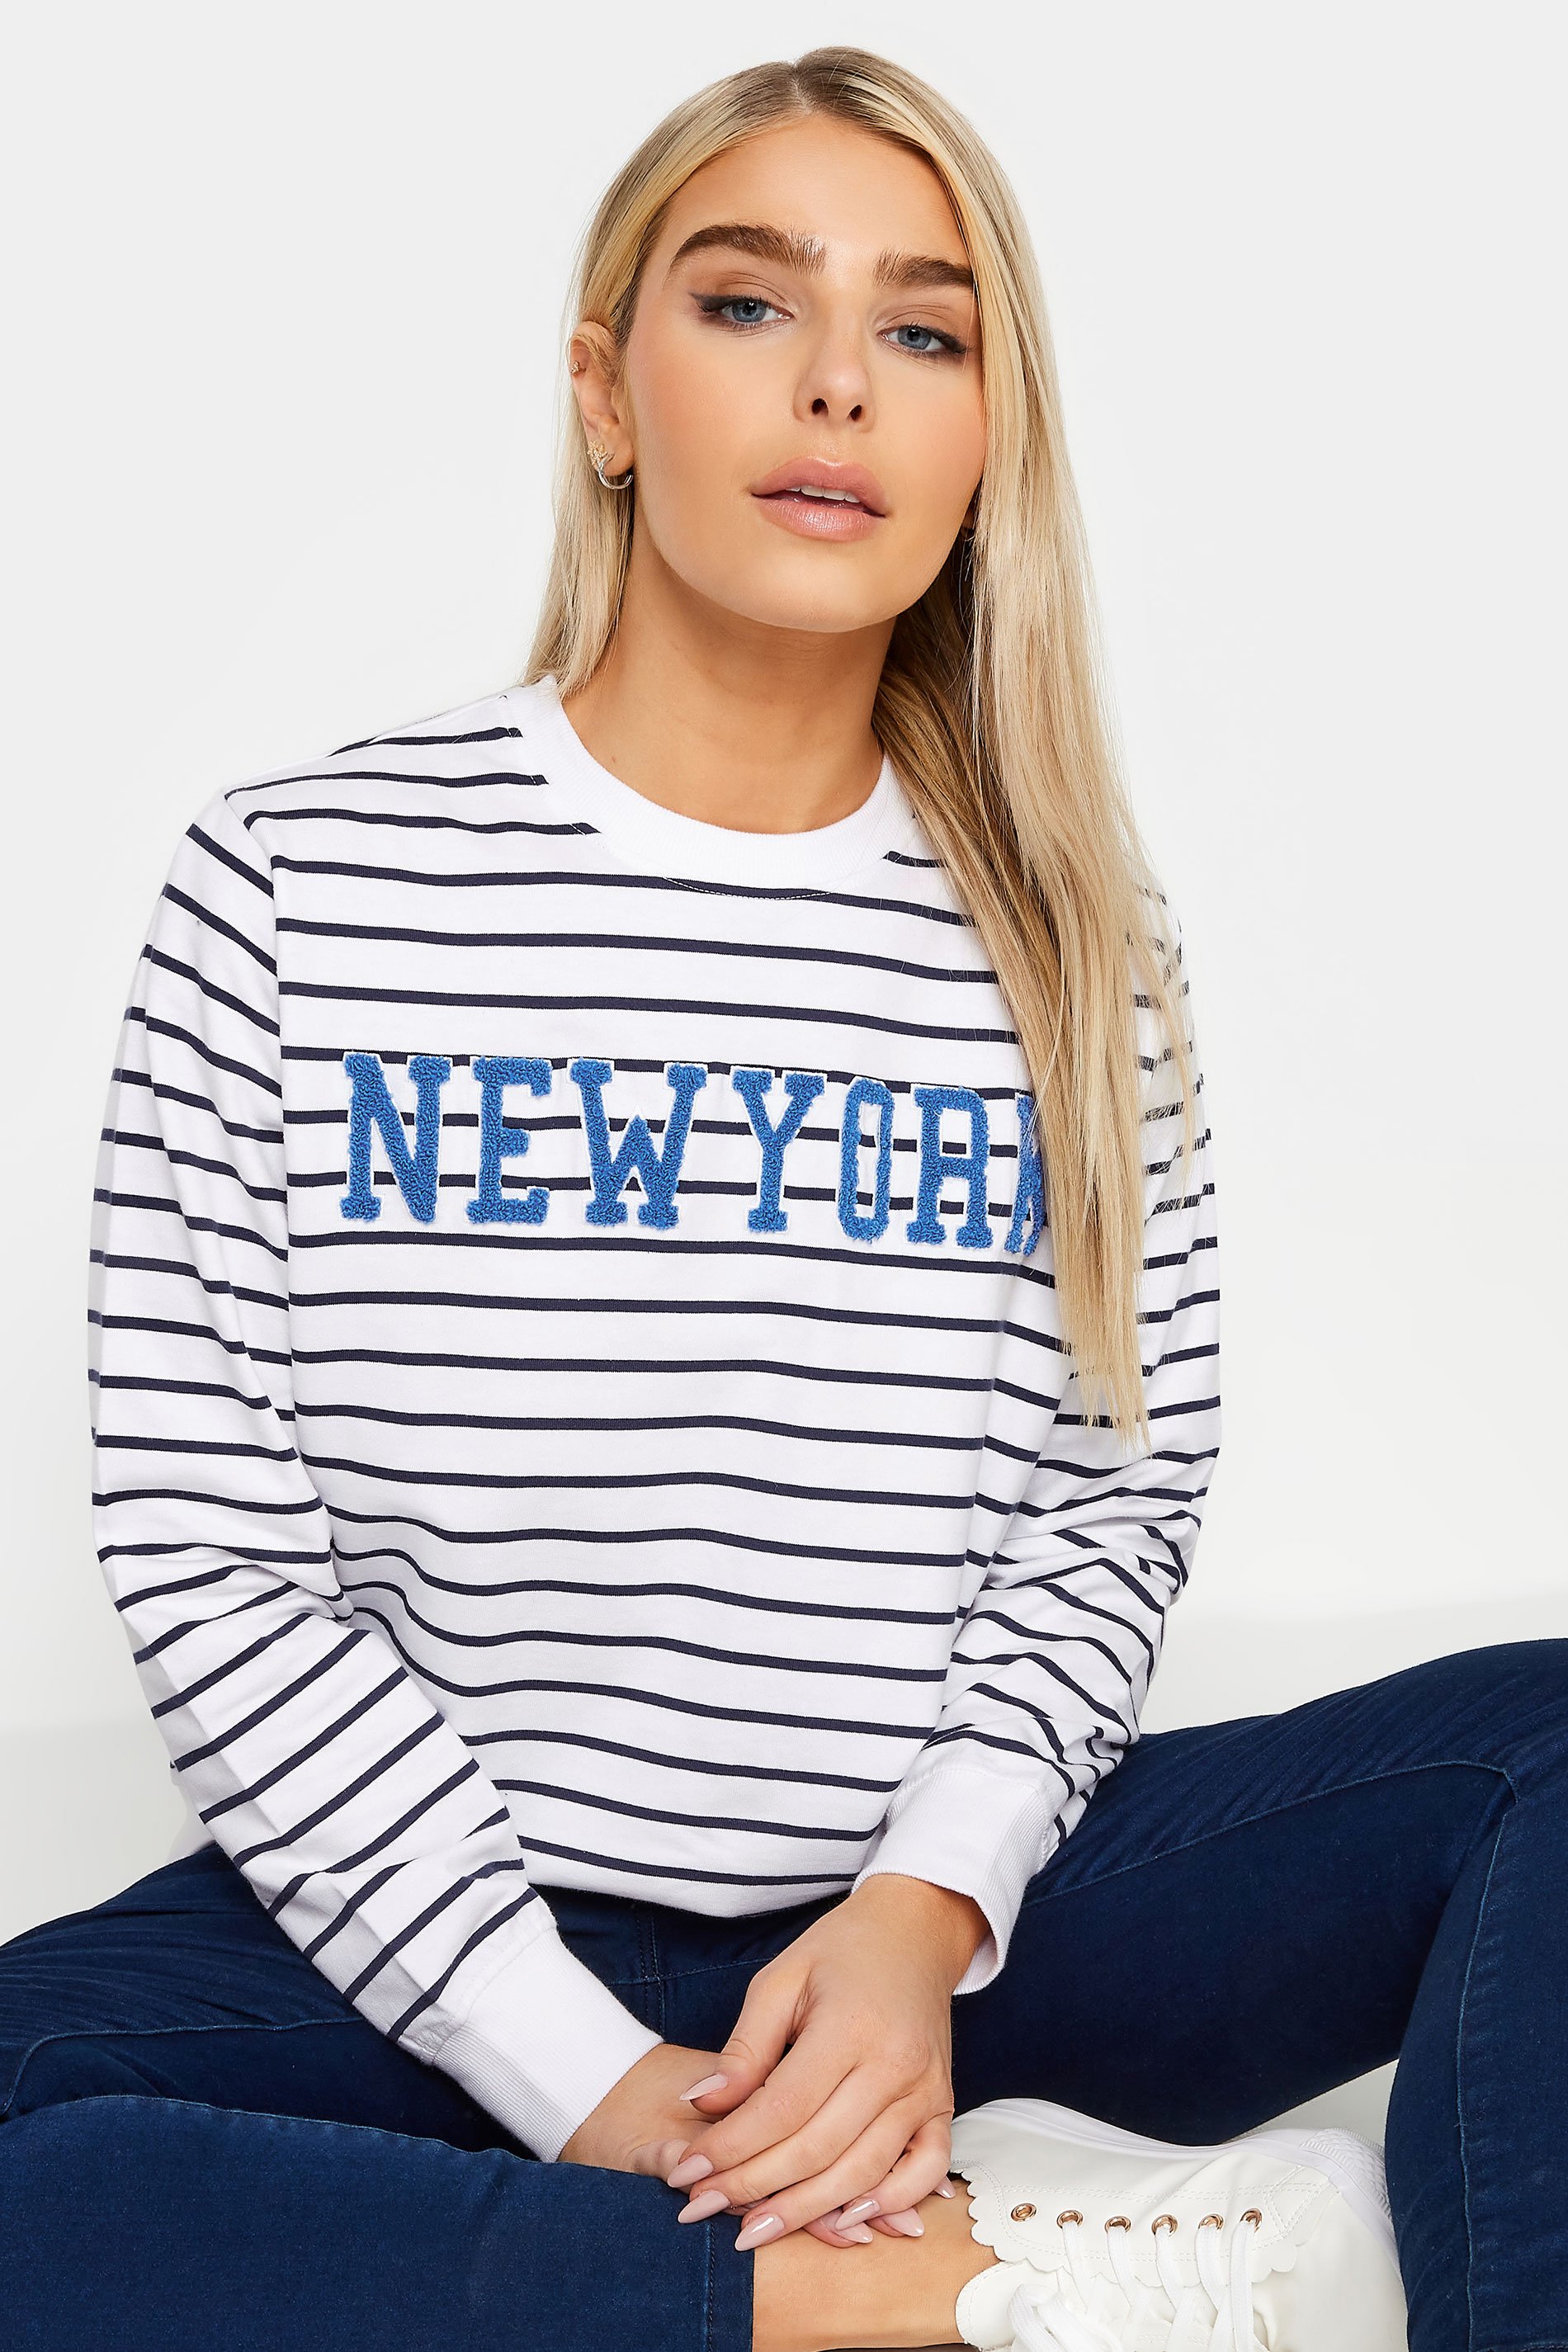 M&Co White & Navy Striped 'New York' Sweatshirt | M&Co 2